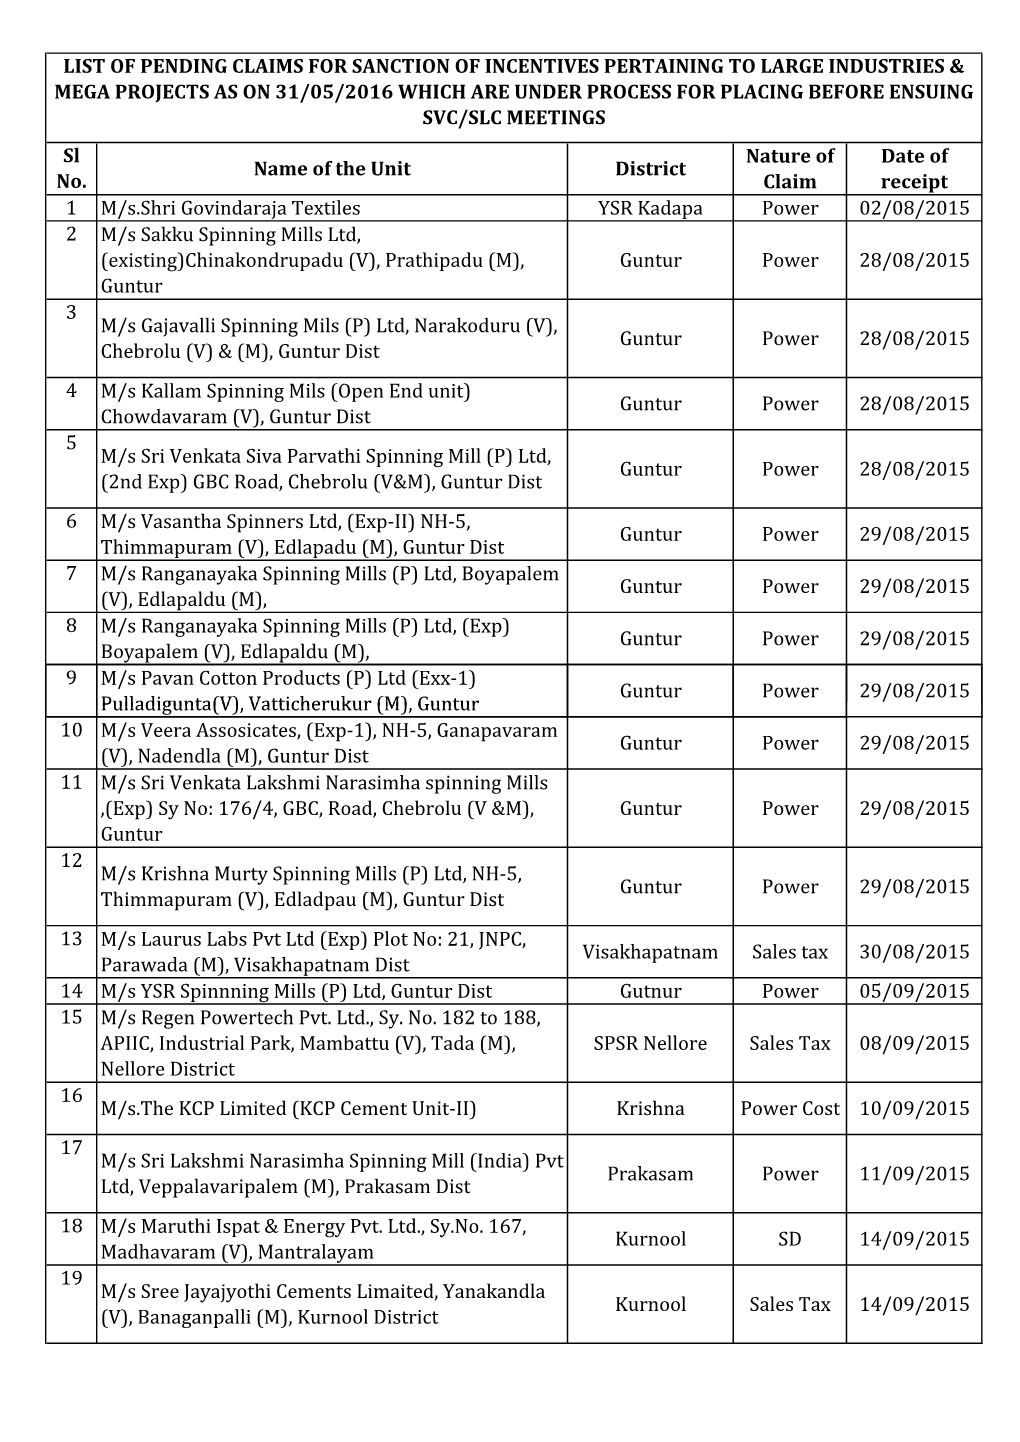 Sl No. Name of the Unit District Nature of Claim Date of Receipt 1 M/S.Shri Govindaraja Textiles YSR Kadapa Power 02/08/2015